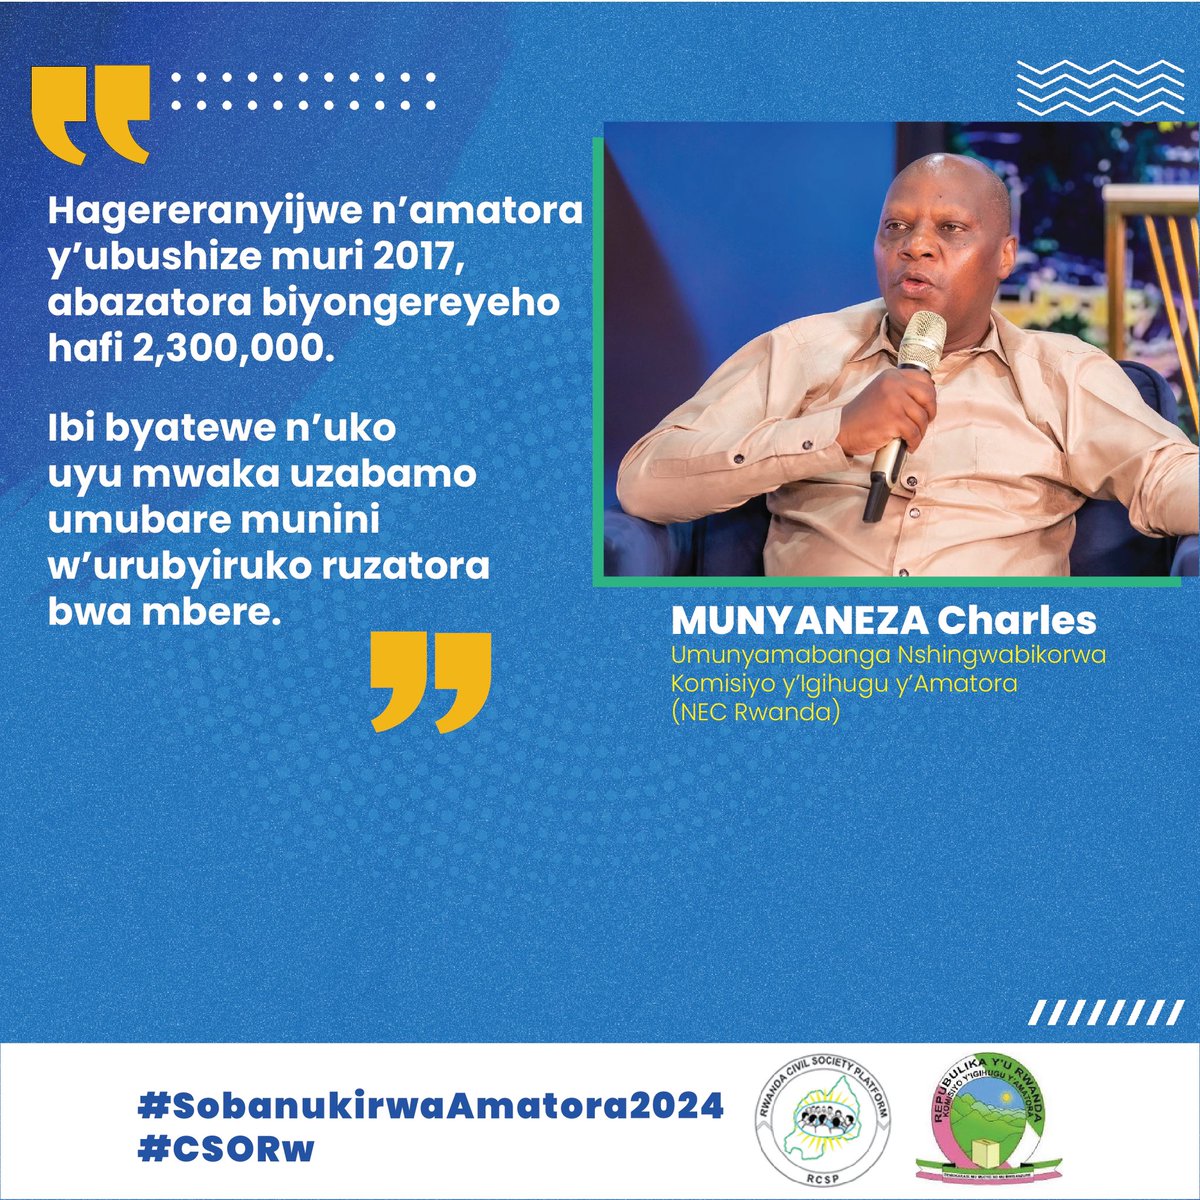 « Hagereranyijwe n'amatora y'ubushize muri 2017, abazatora biyongereyeho hafi 2,300,000. Ibi byatewe n'uko uyu mwaka uzabamo umubare munini w'urubyiruko ruzatora bwa mbere. » Munyaneza Charles, Umunyamabanga Nshingwabikorwa wa @RwandaElections #SobanukirwaAmatora2024 #CSORw